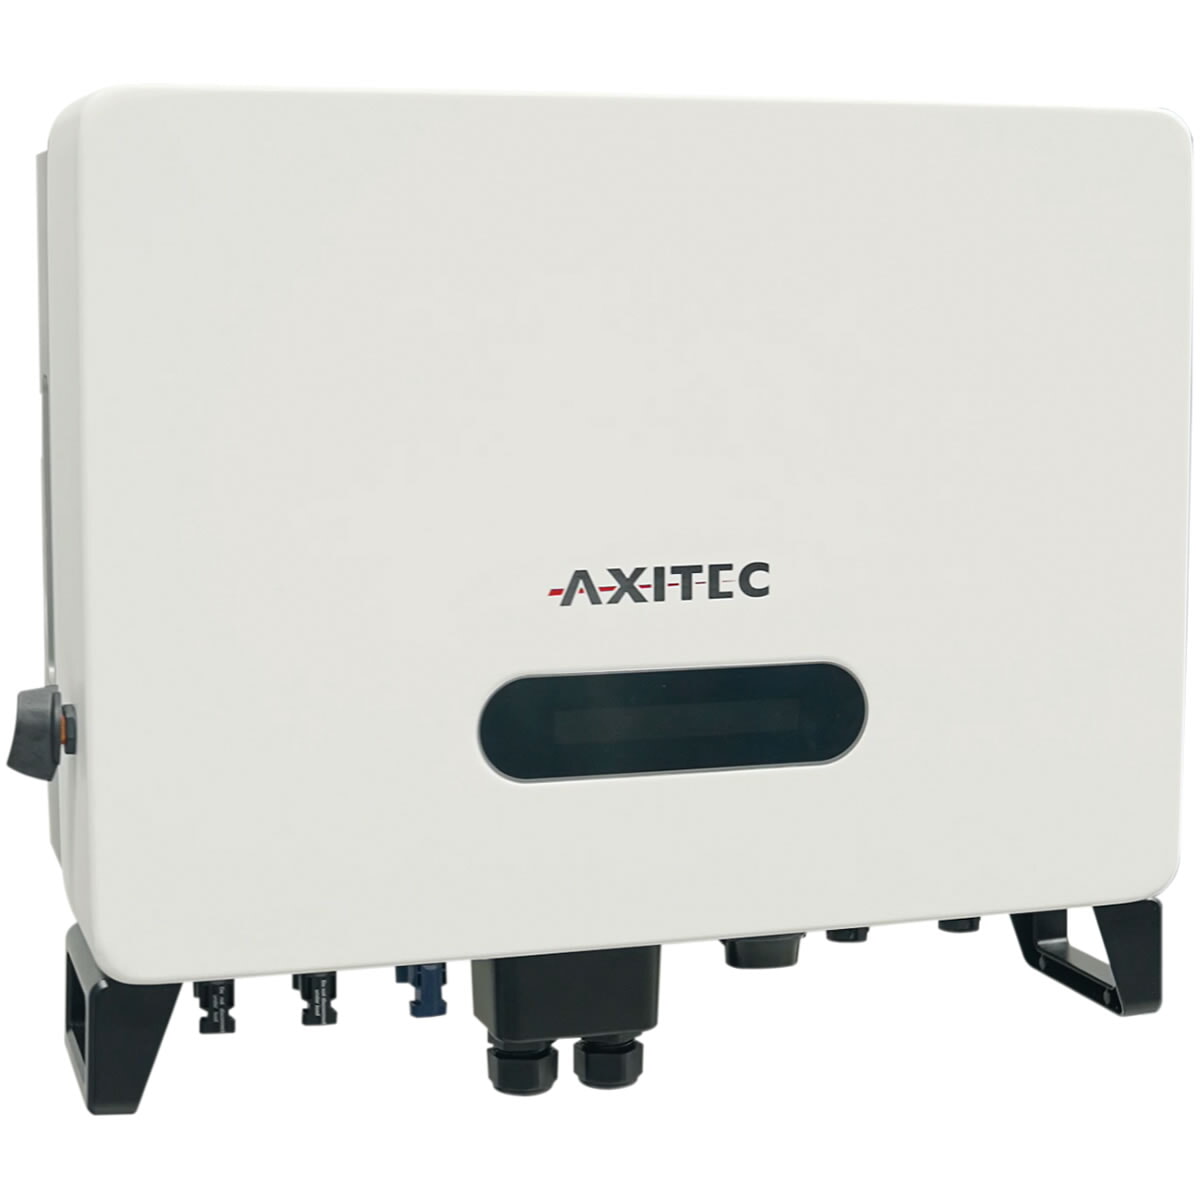 AXITEC Axihycon 6H hybrid inverter, 3-phase